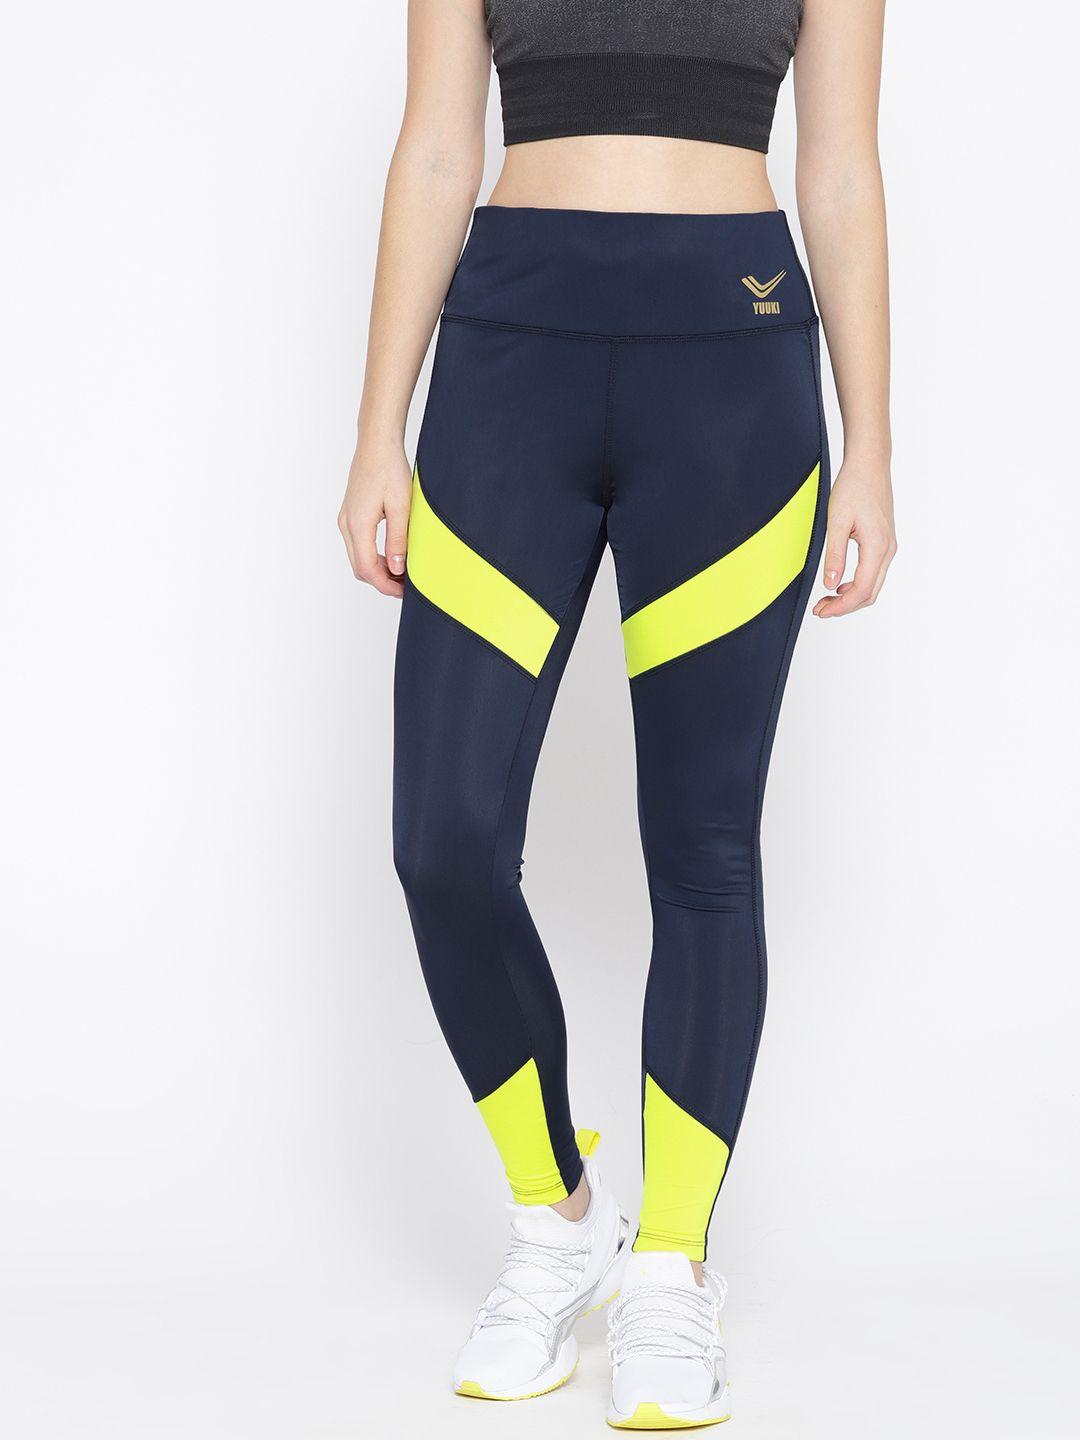 yuuki women navy blue & yellow colourblocked workout tights